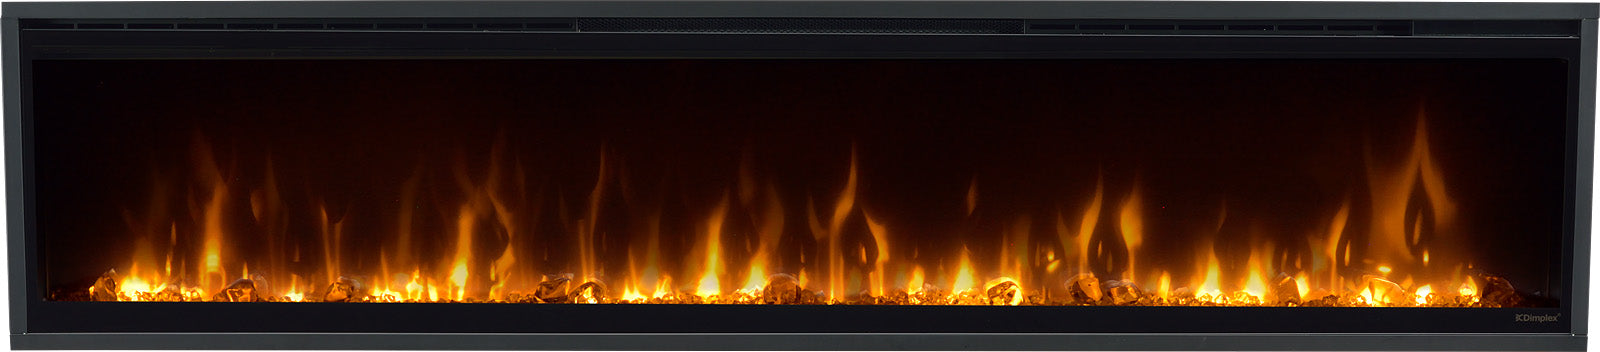 Ignite XL 74 - Electric fireplace insert